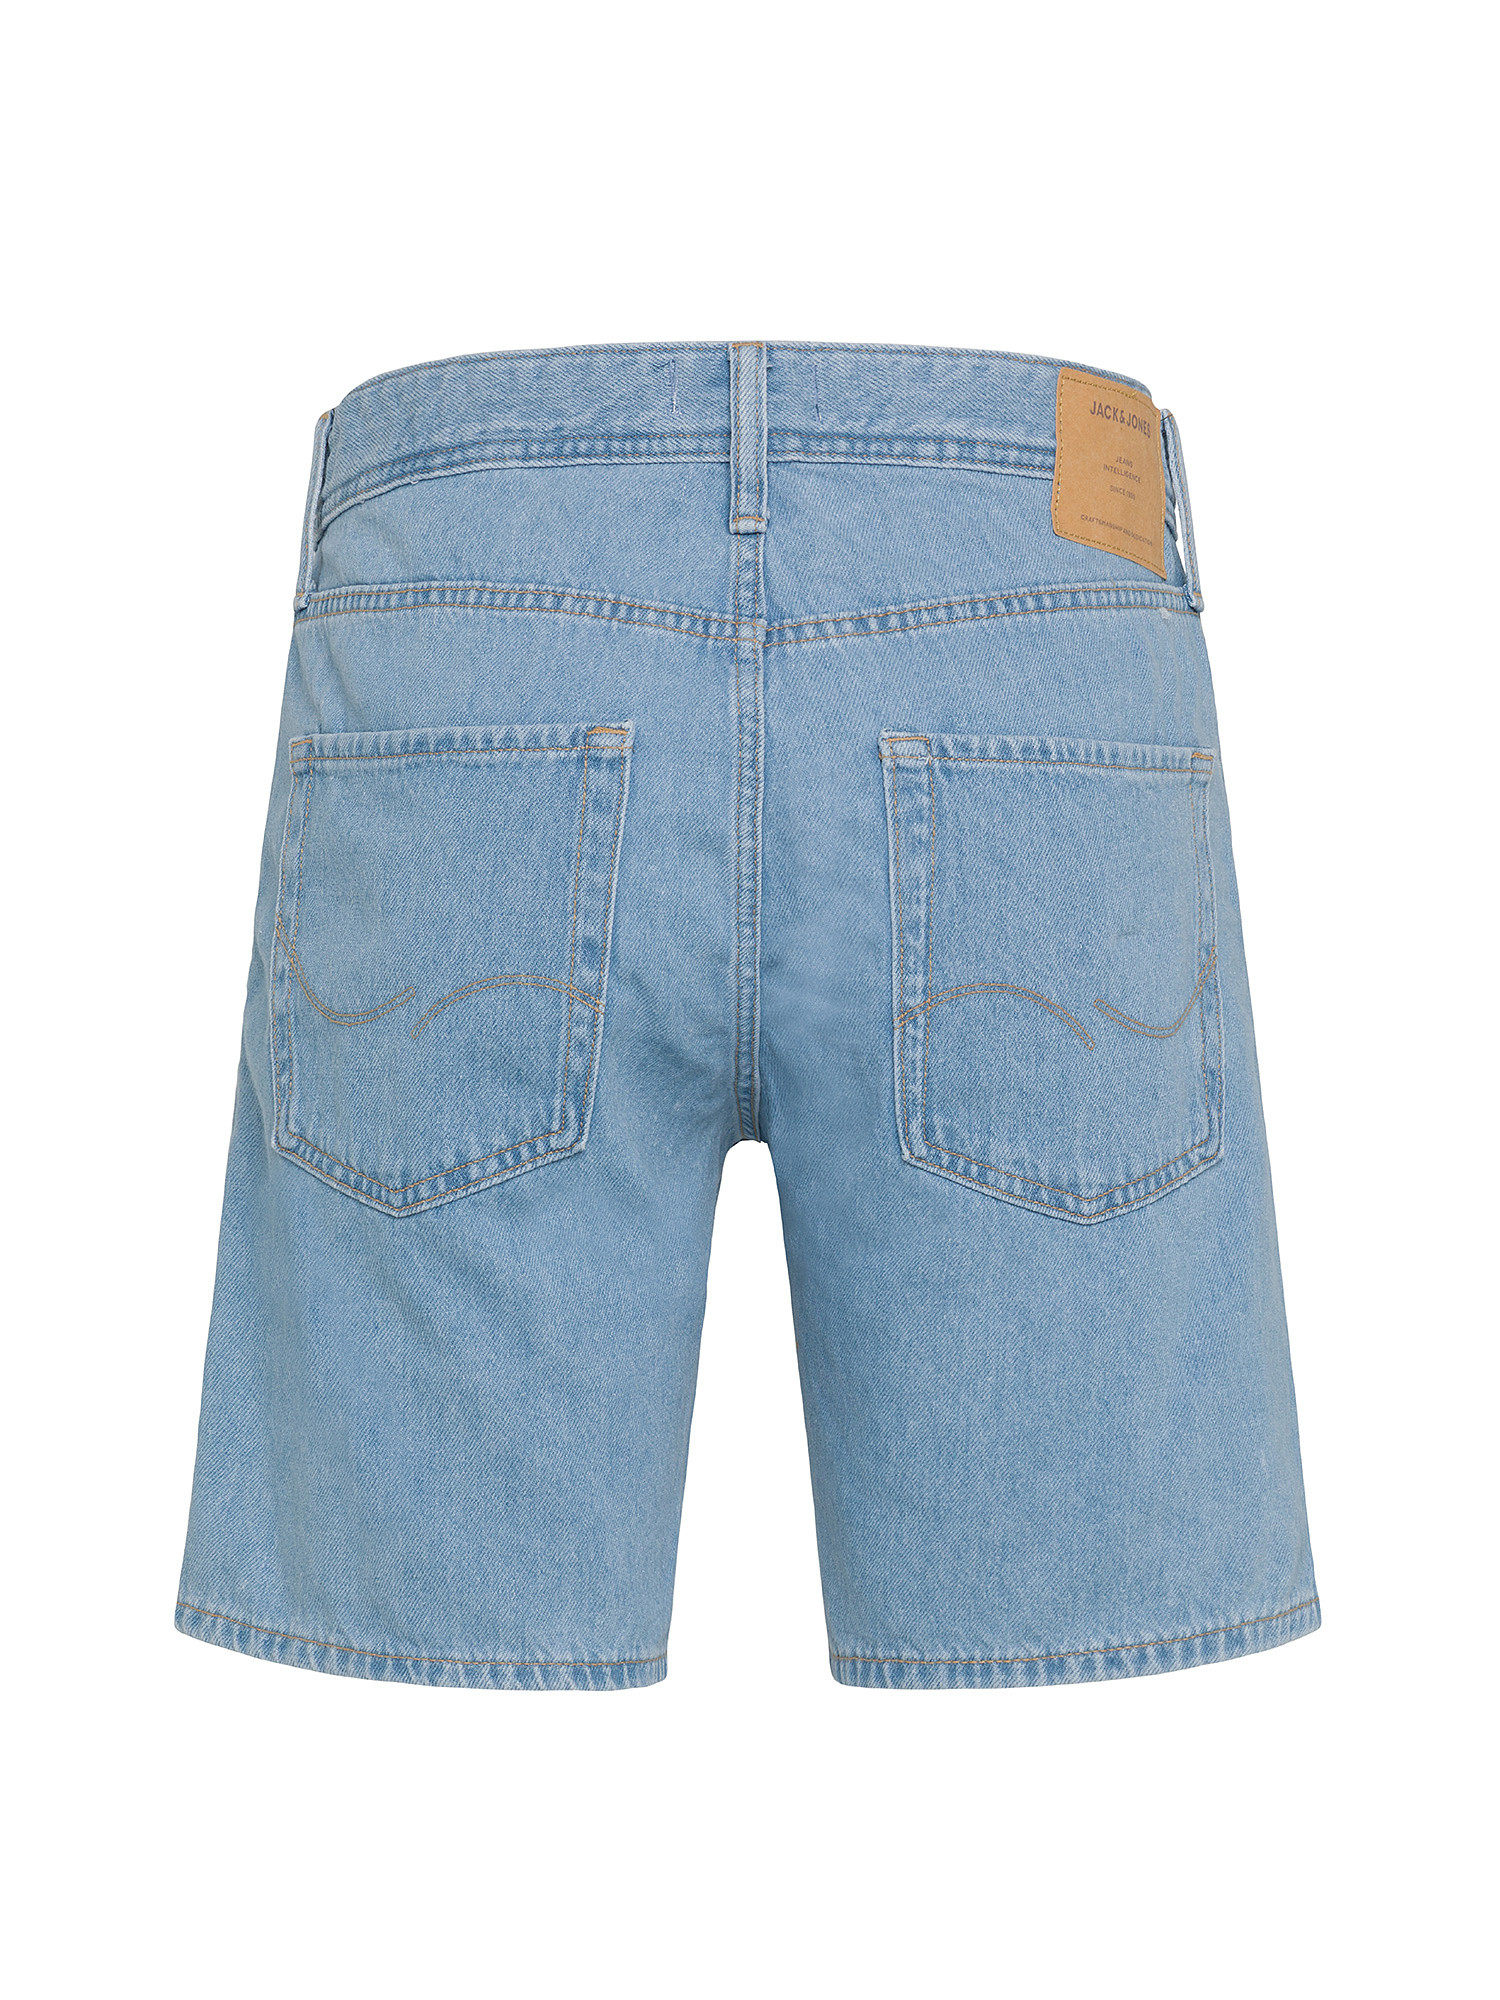 Jack & Jones - Bermuda cinque tasche in jeans, Denim, large image number 1